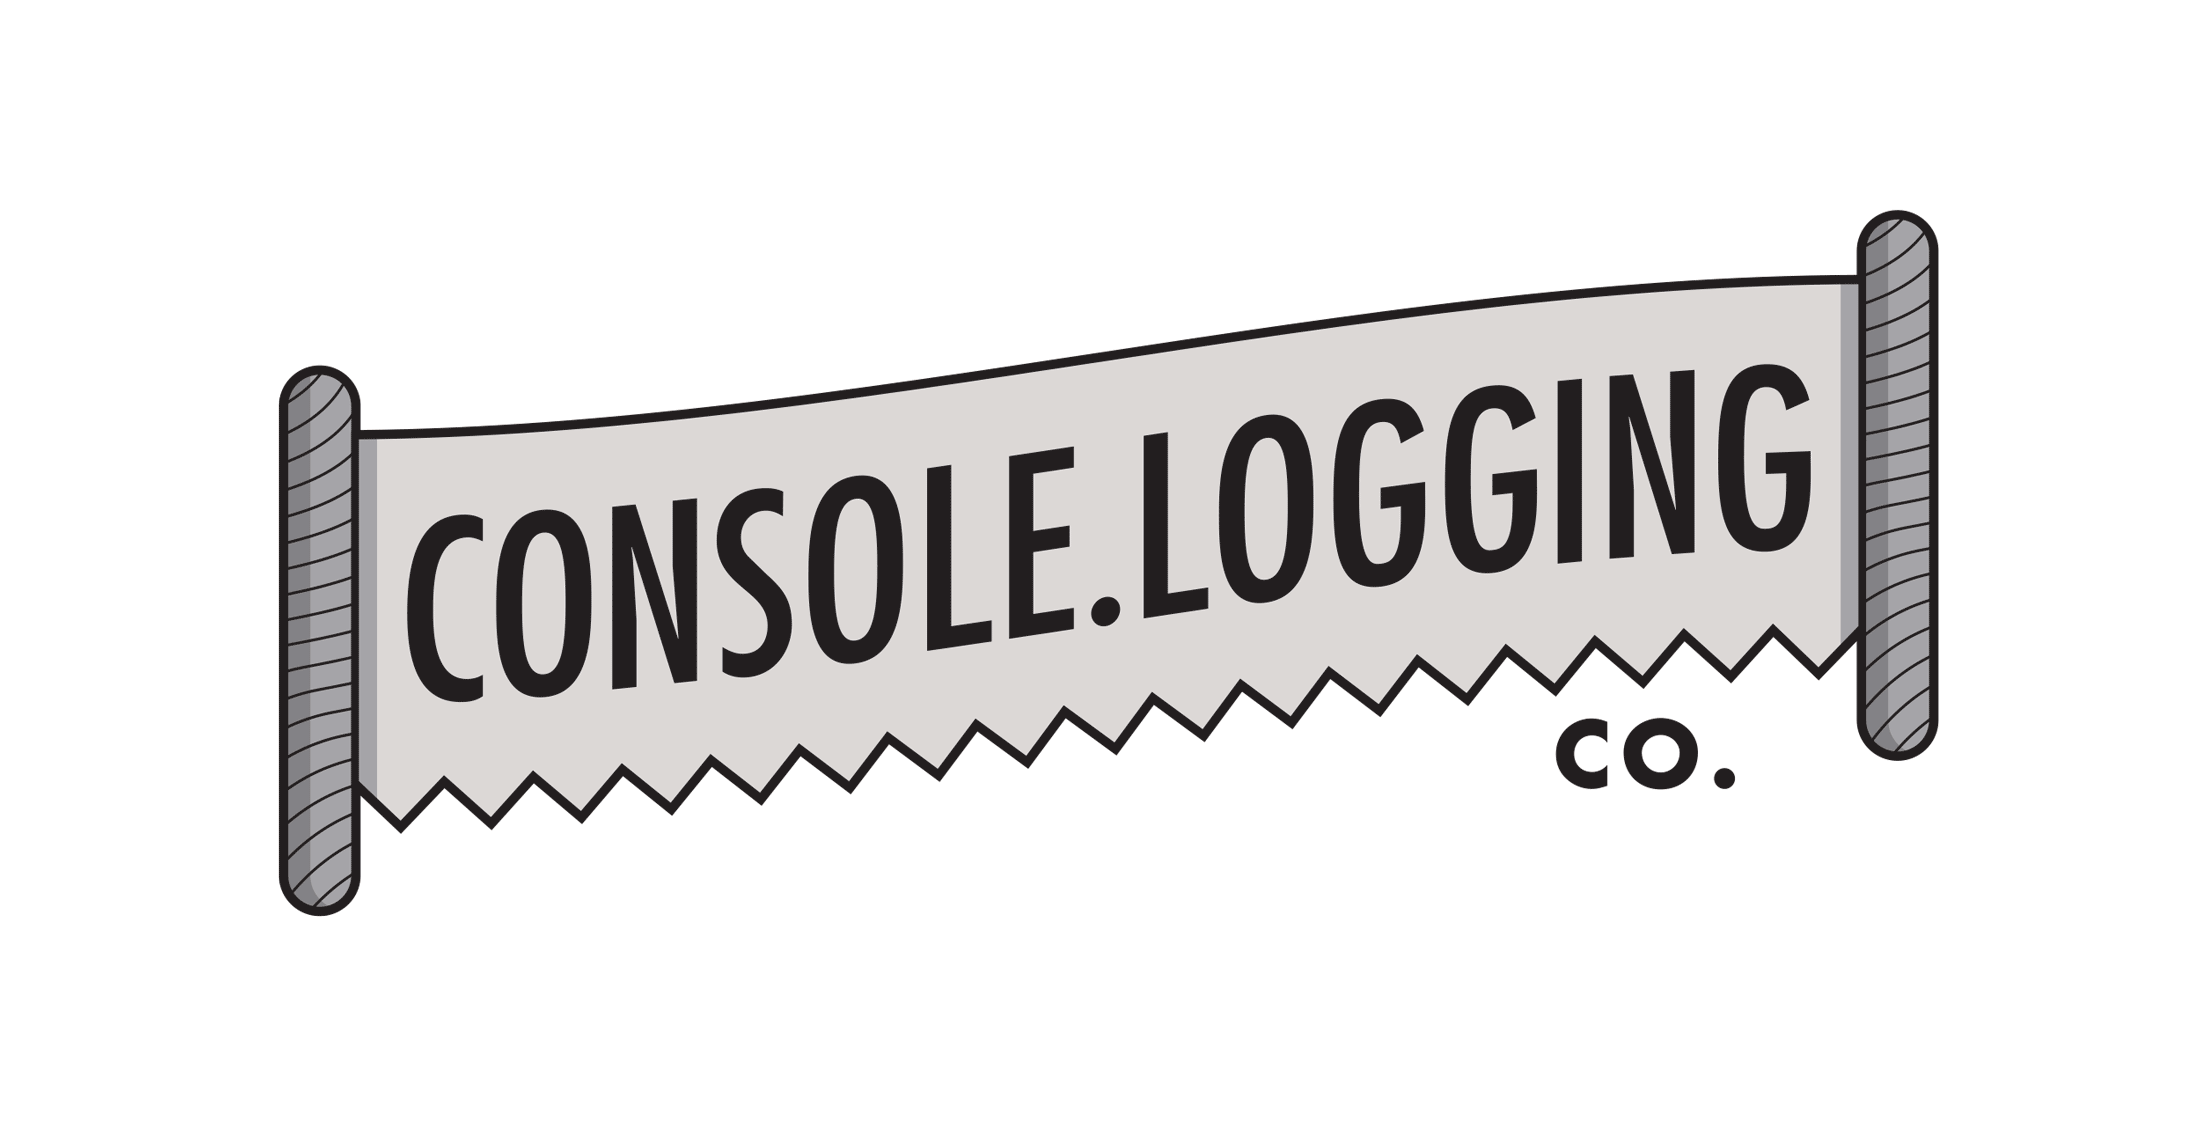 The Console.Logging Co. logo.